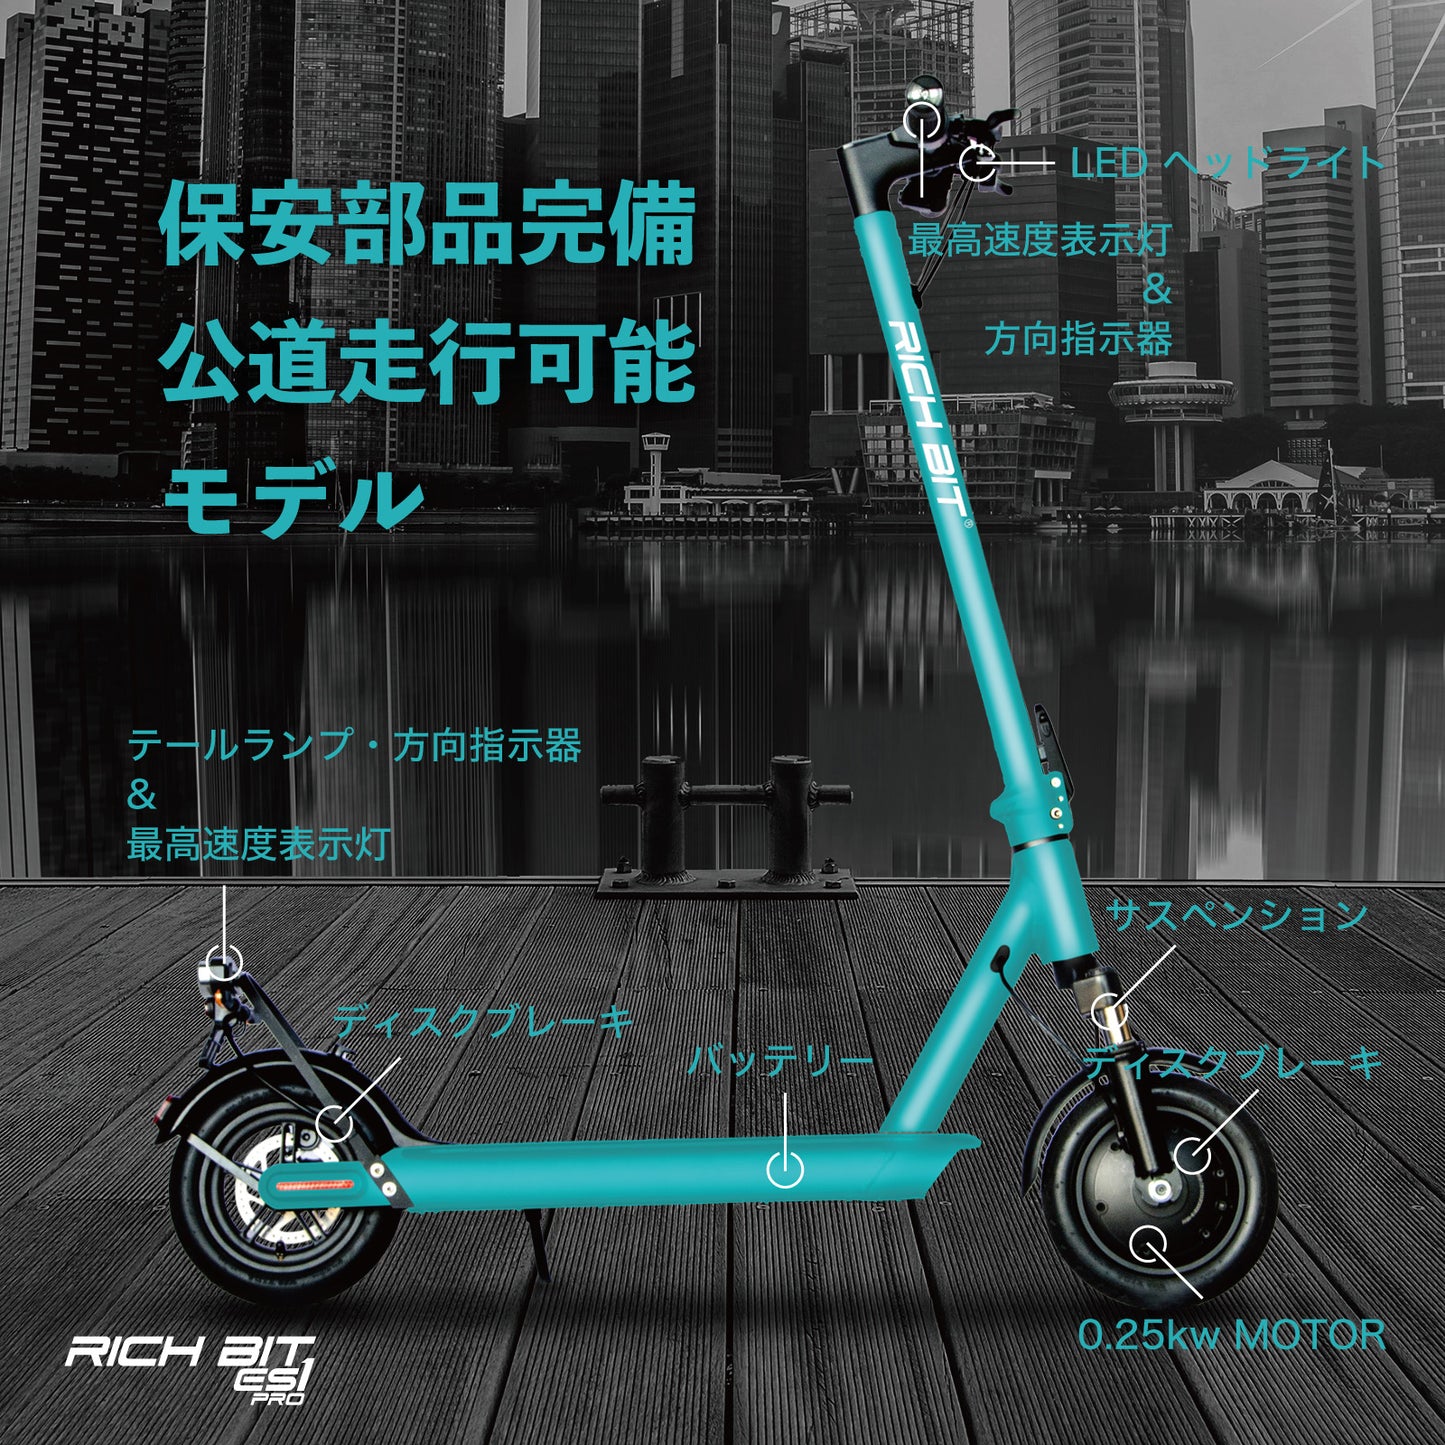 RICHBIT ES1 Pro★特定小型原動機付自転車モデル【ブラック】電動キックボード 公道/歩道走行可能 20km/h以下